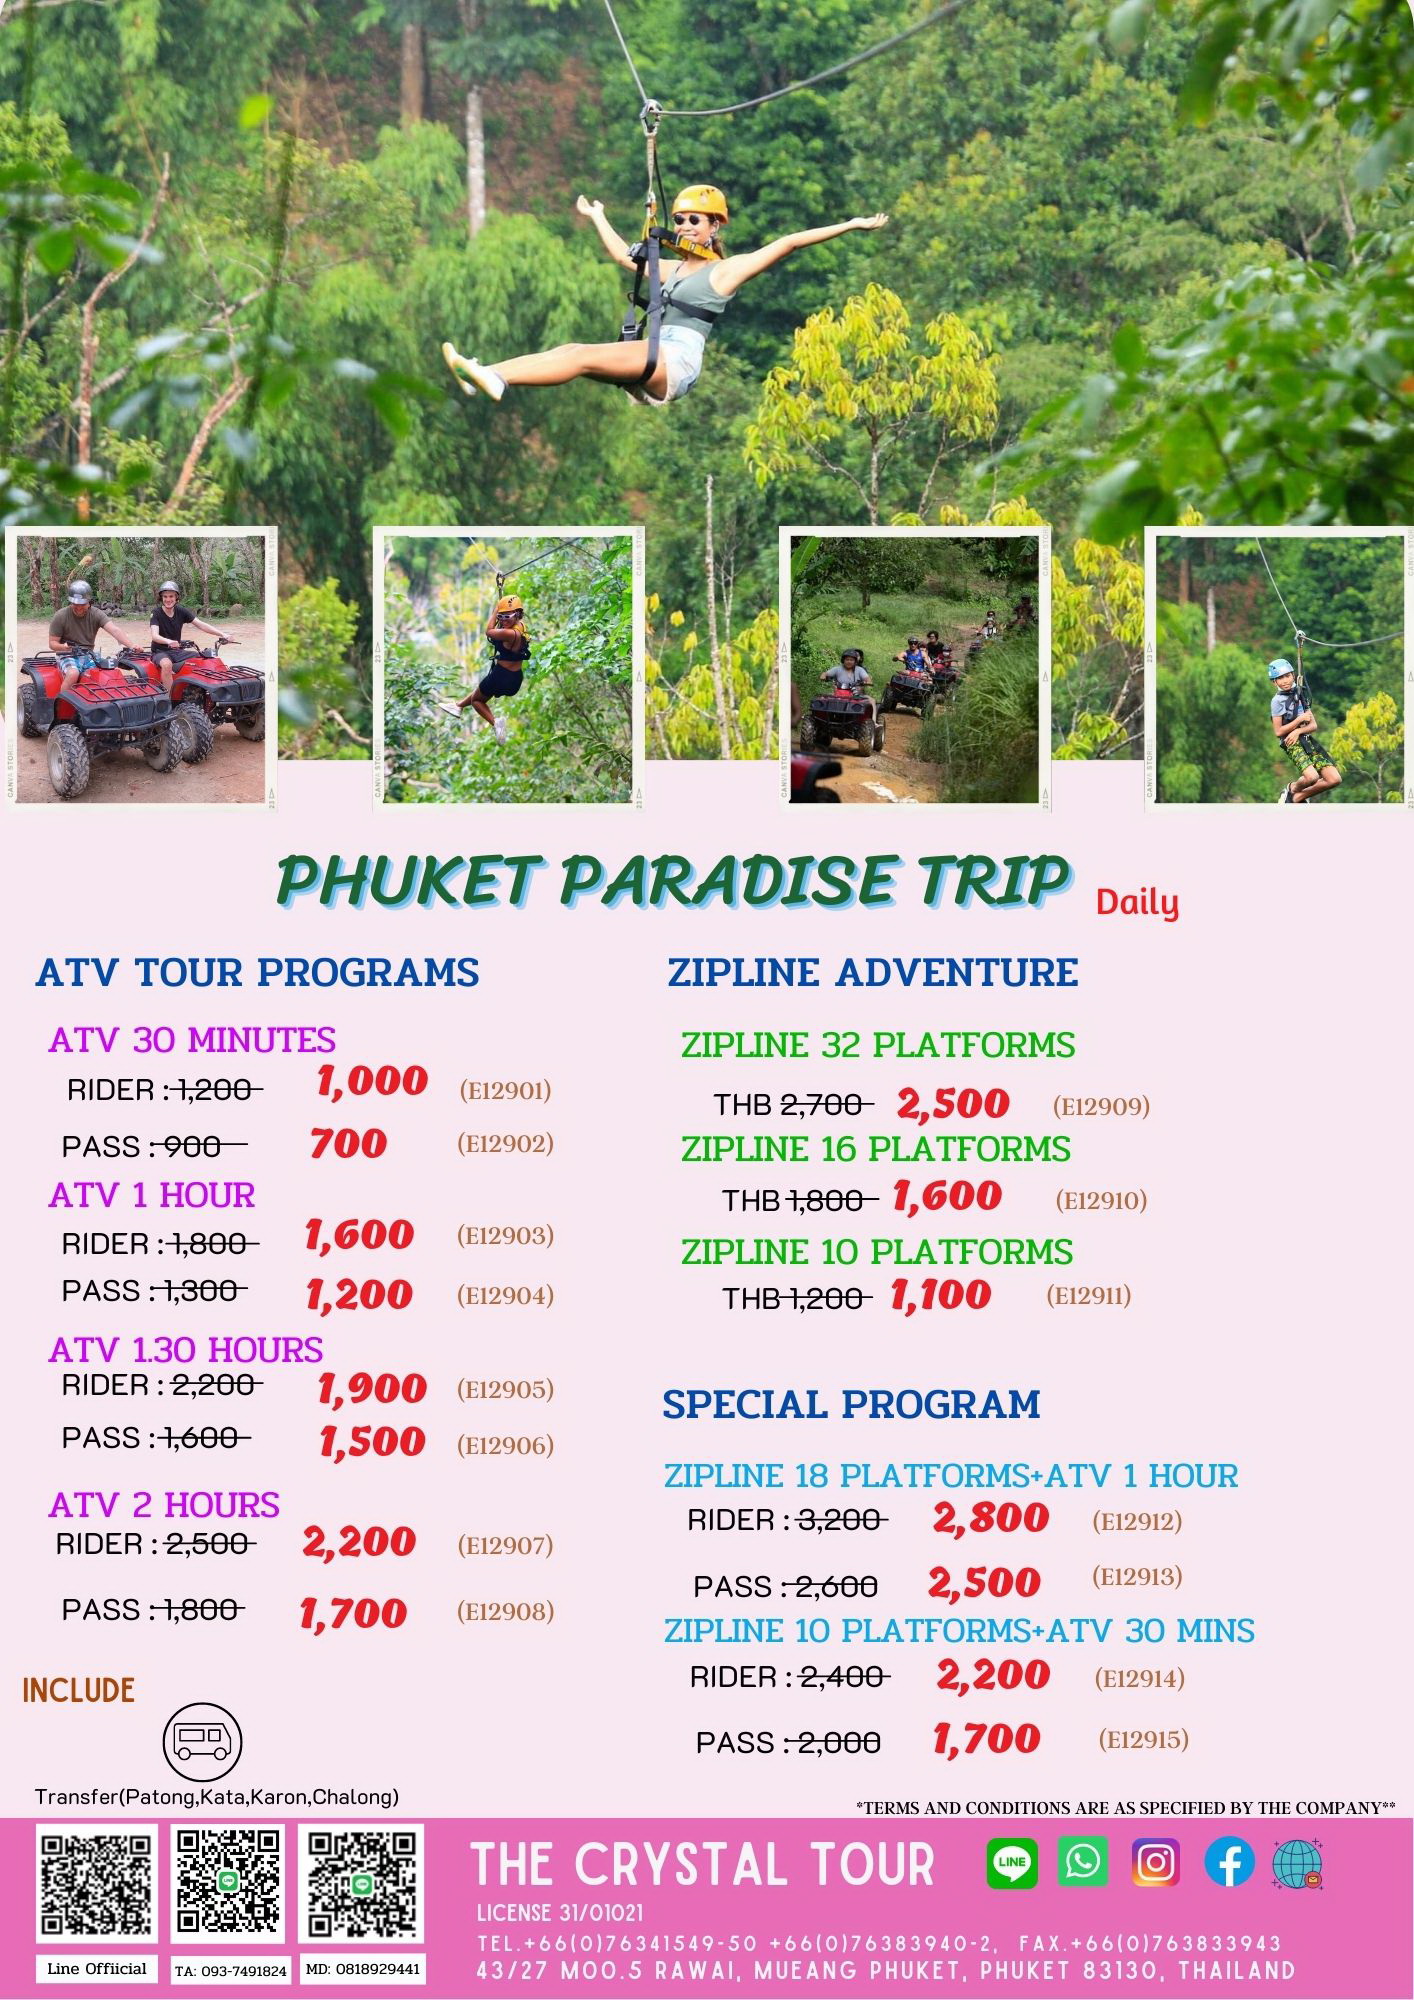 phuket paradise trip company limited